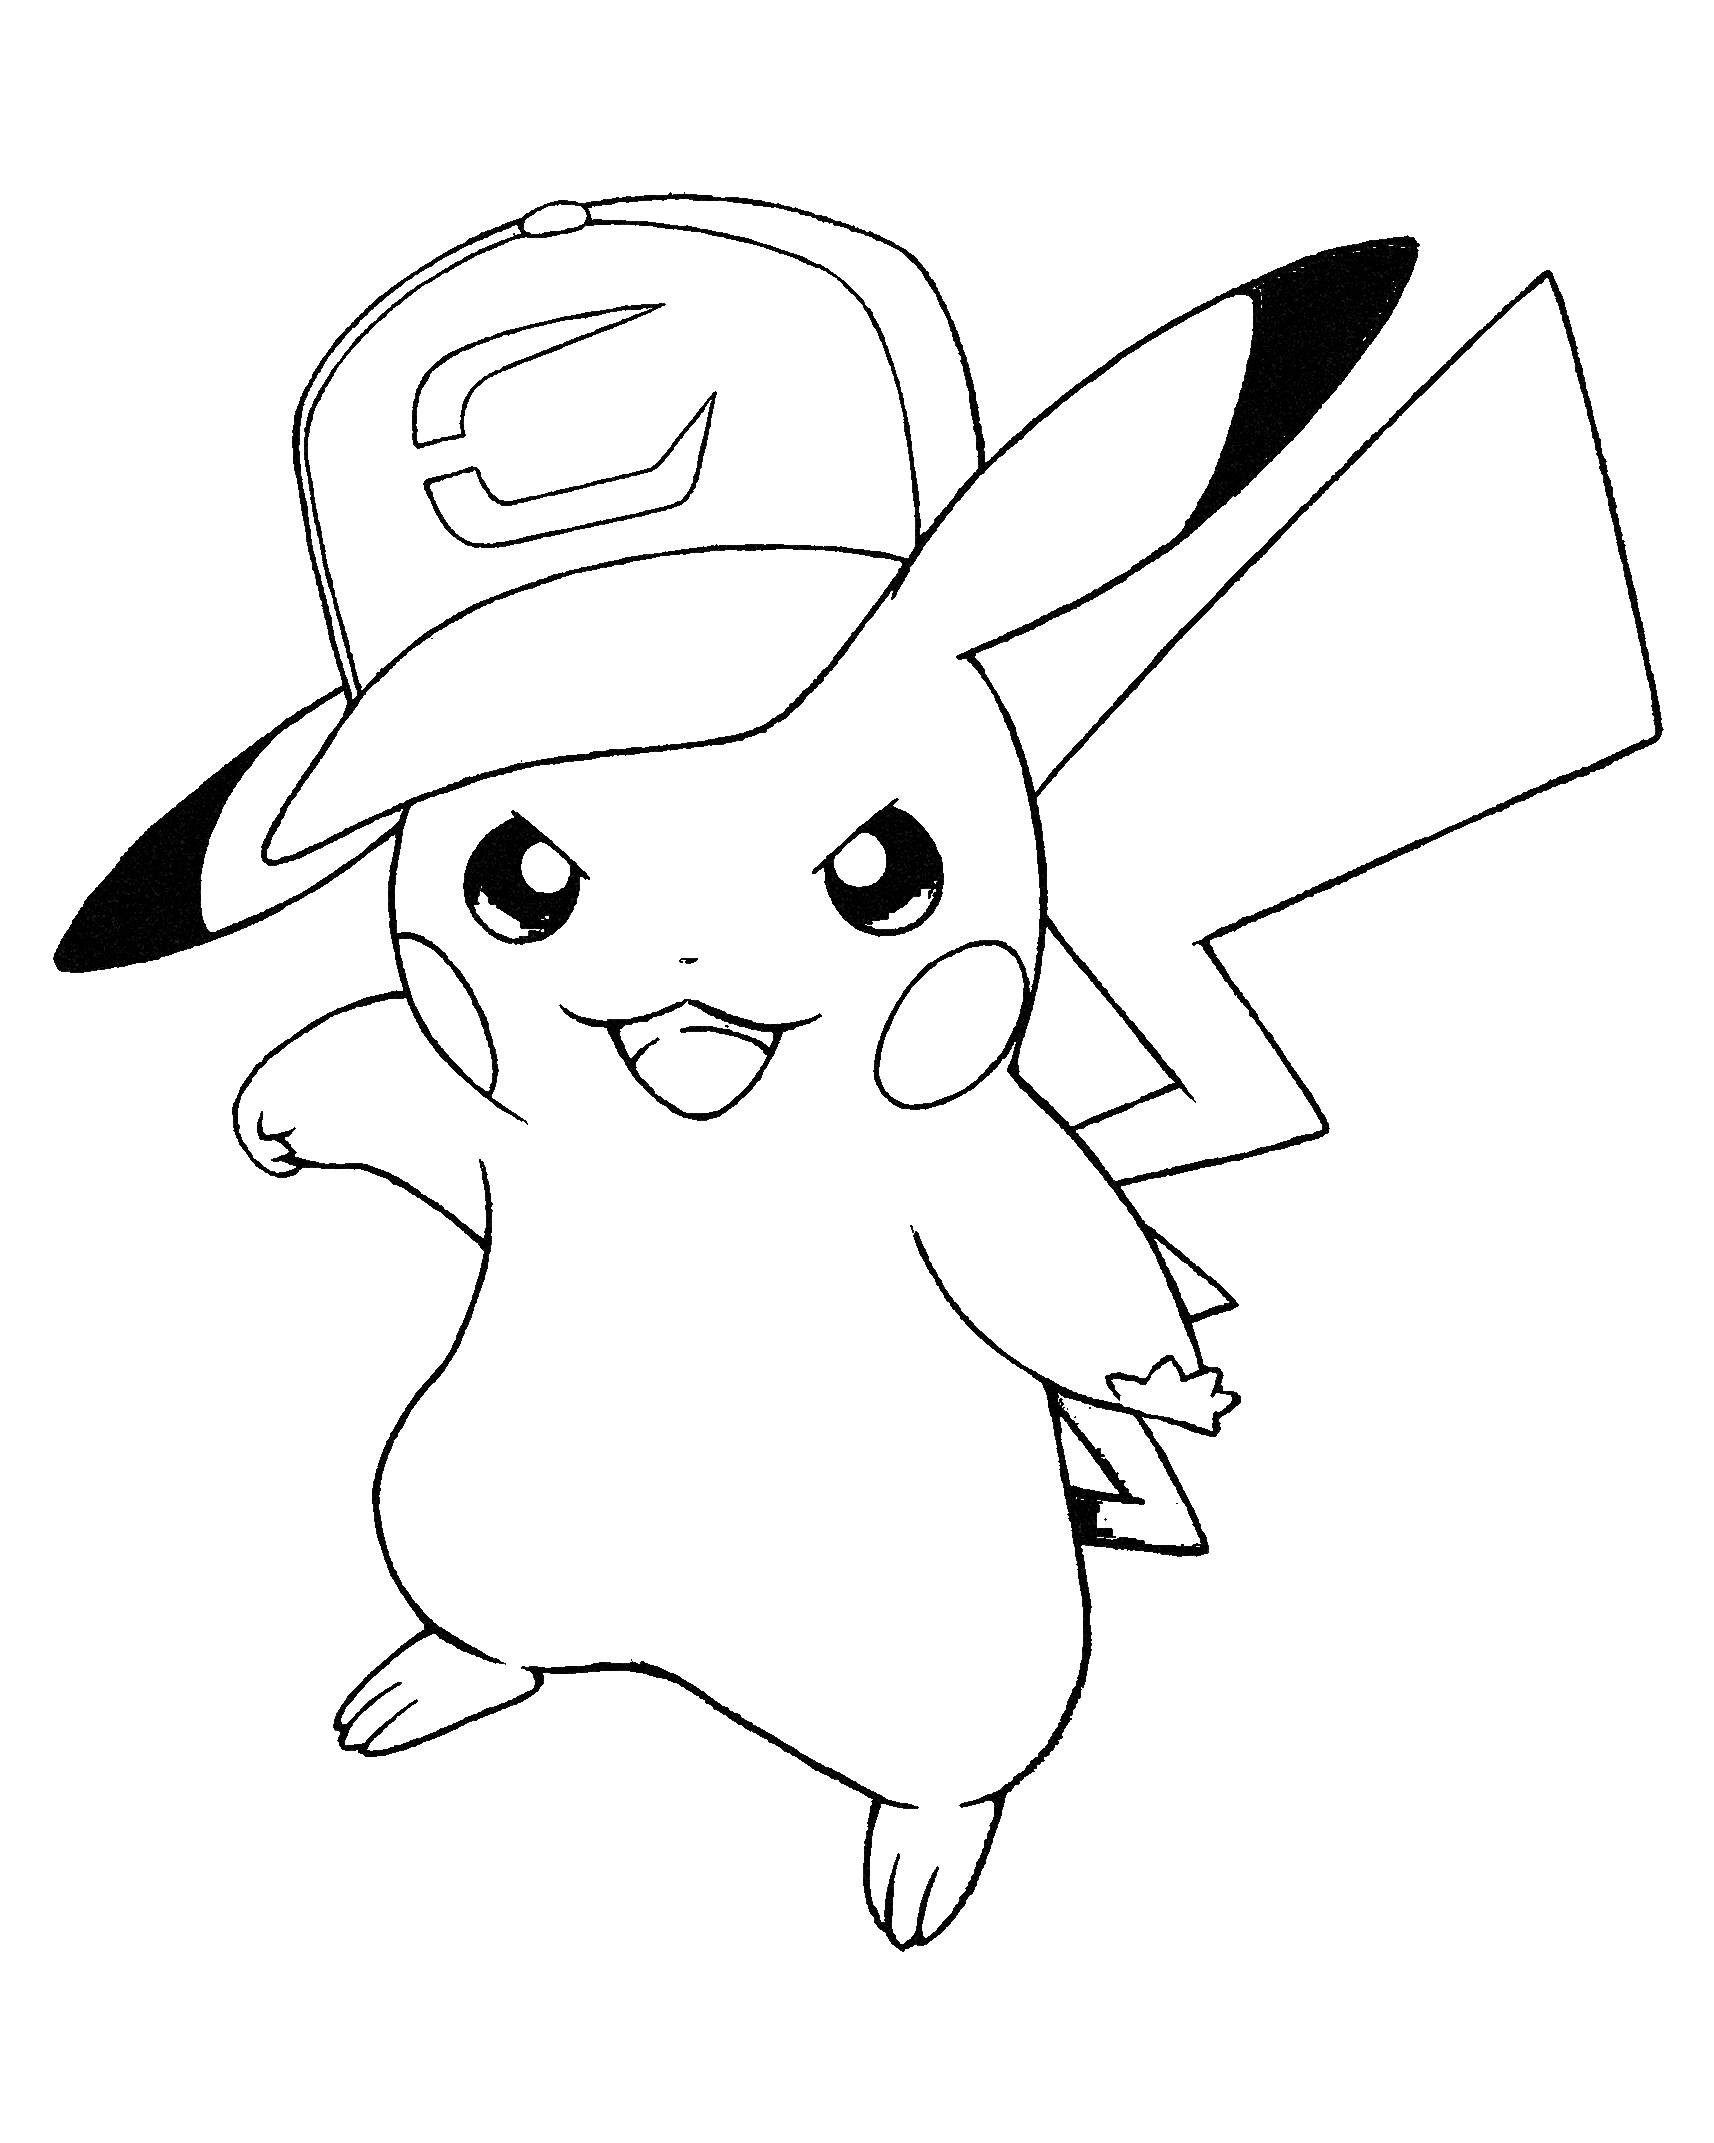 Pikachu wearing Ash hat coloring page